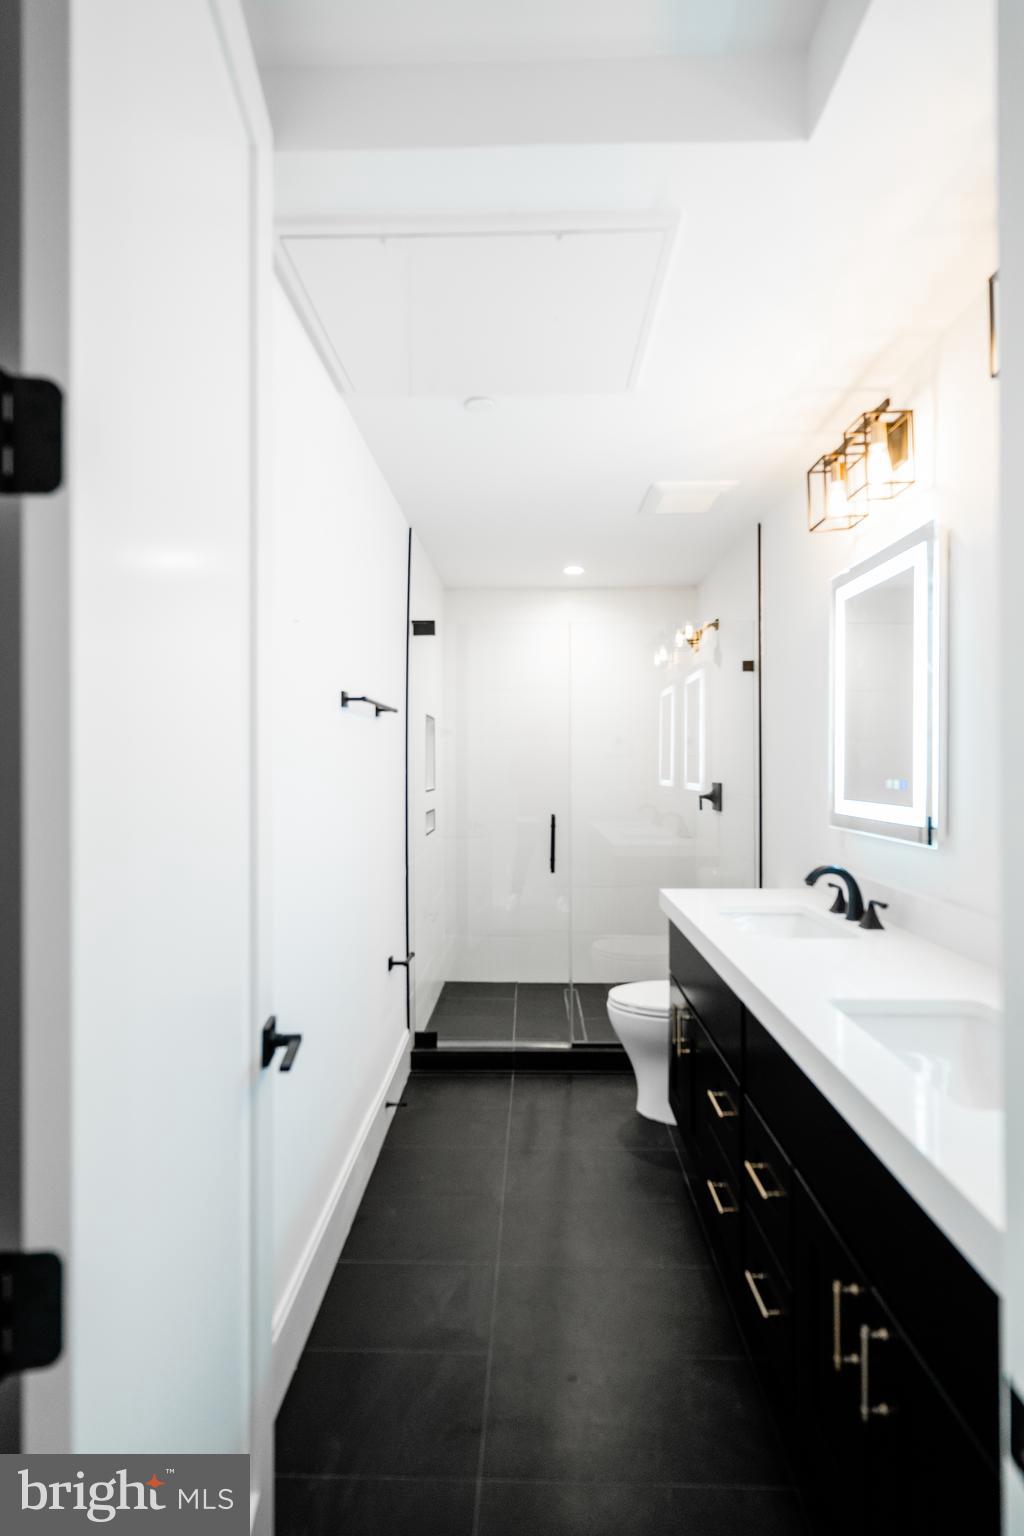 Hallway Bathroom Changes Coming - Addicted 2 Decorating®